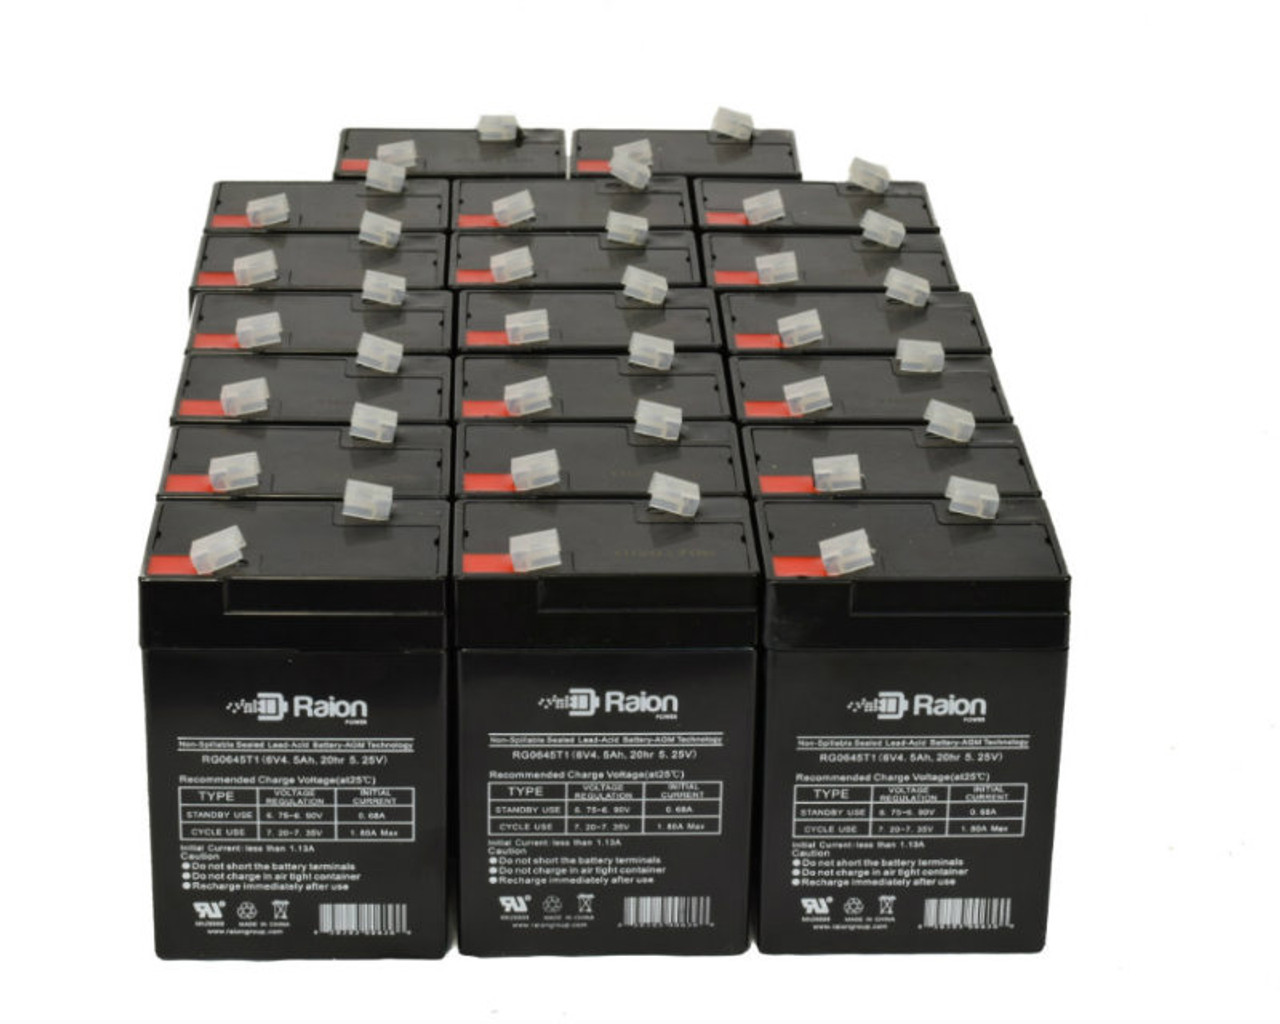 Raion Power 6V 4.5Ah Replacement Emergency Light Battery for Sure-Lites / Cooper Lighting SL-26-117 - 20 Pack